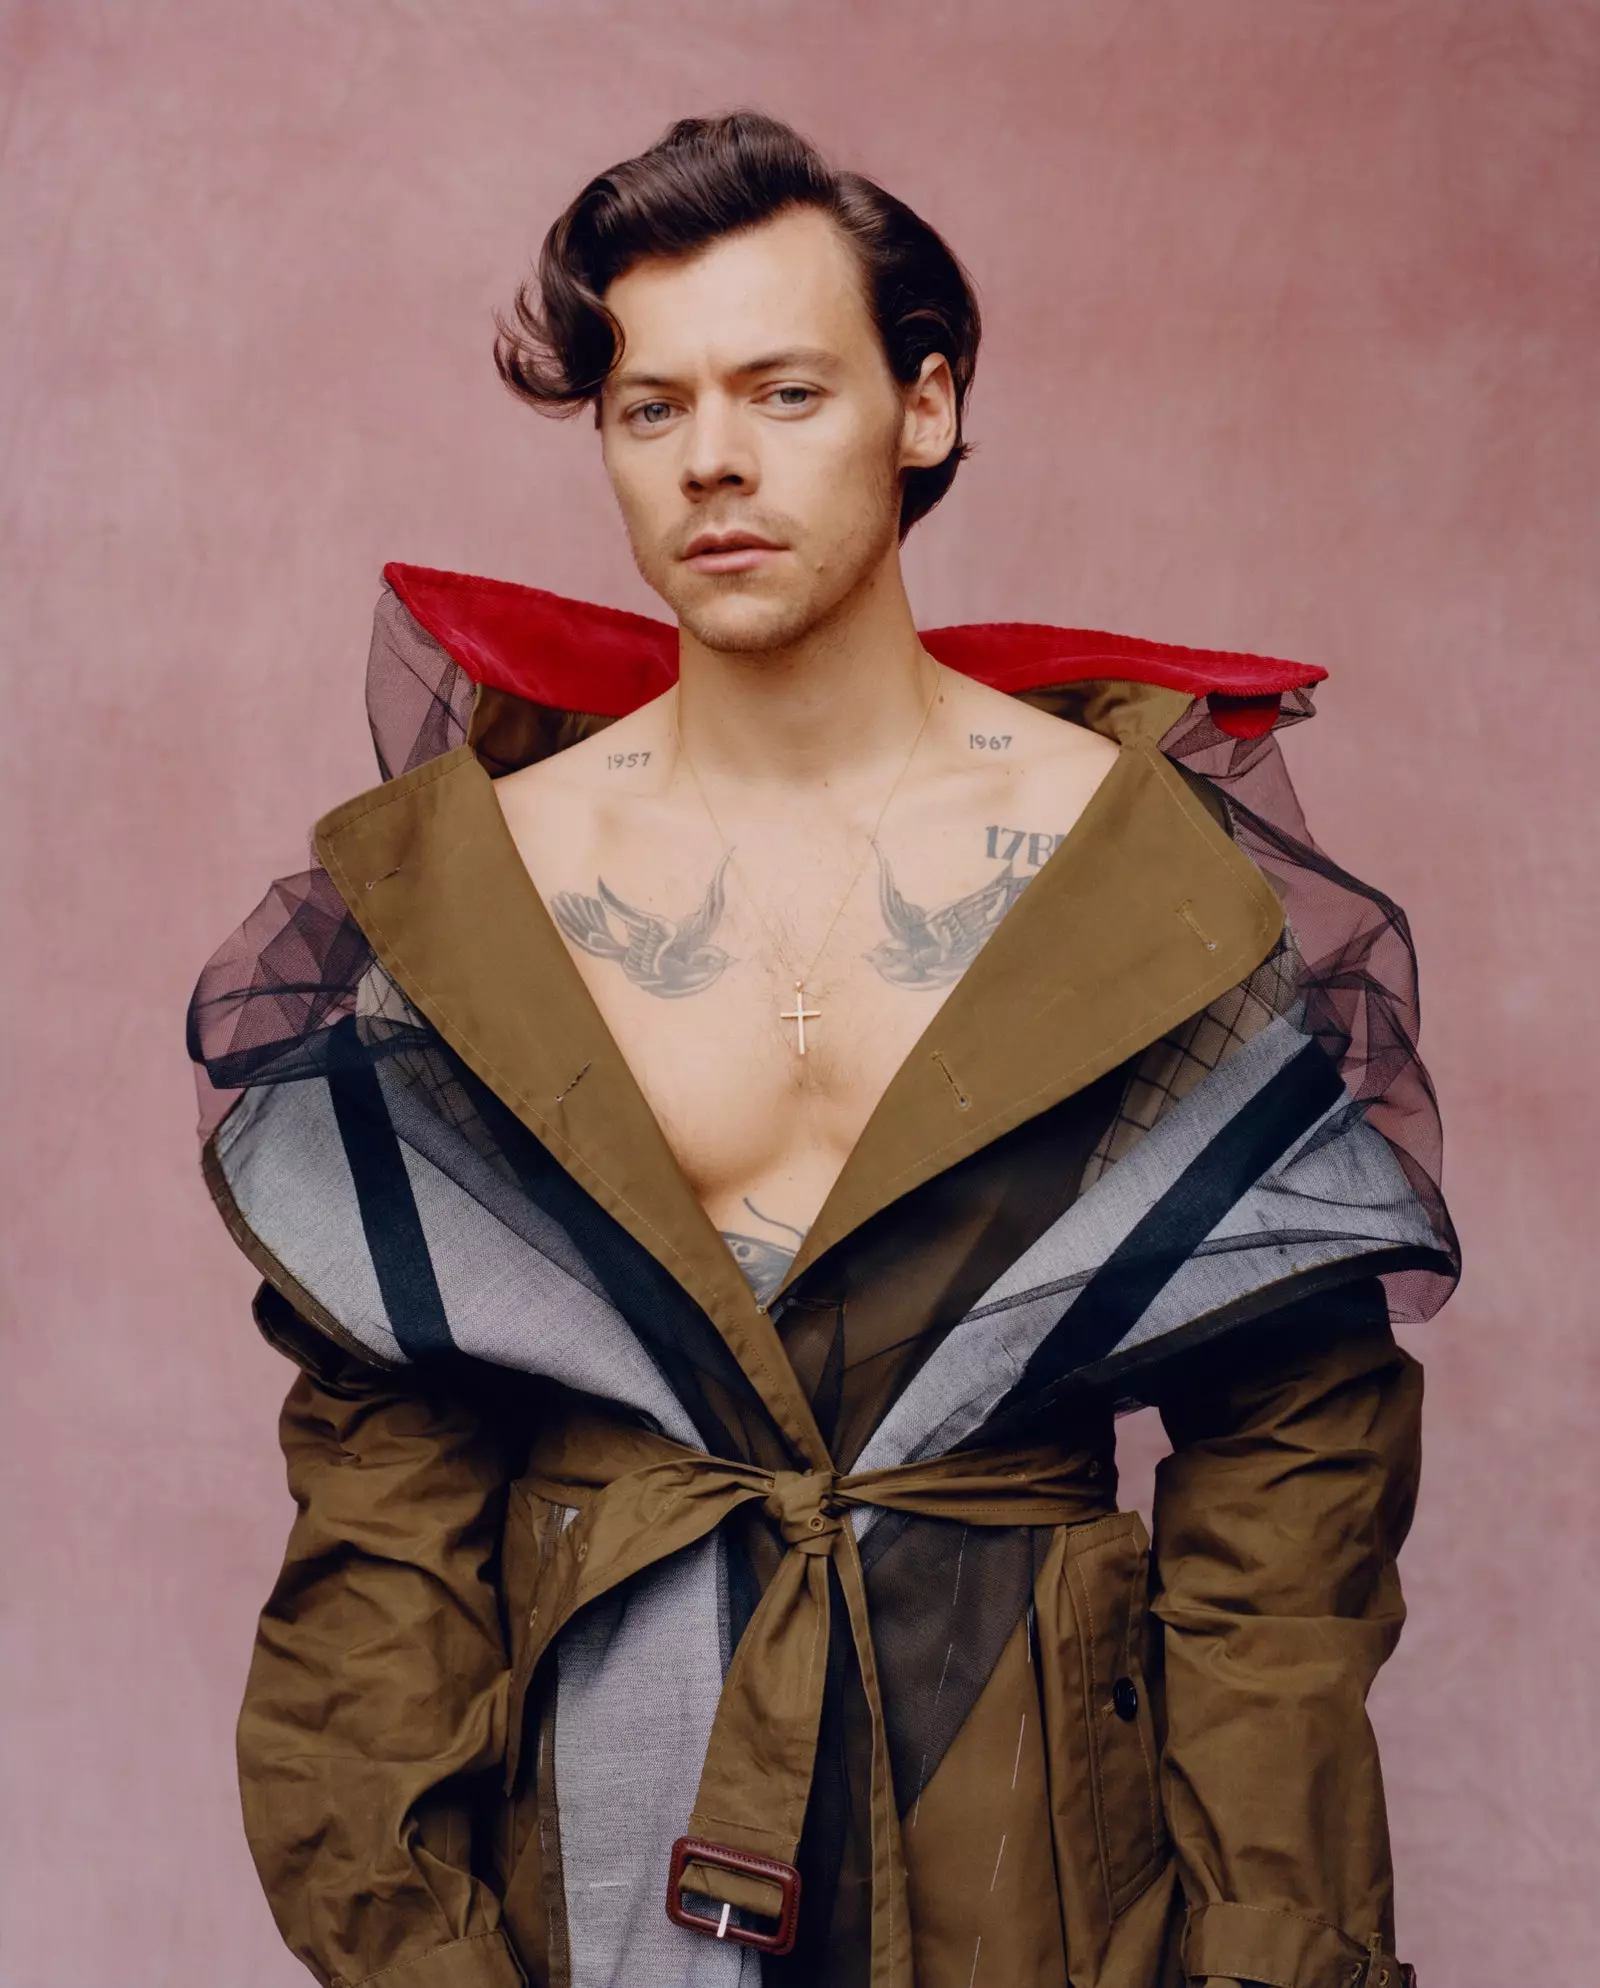 US Vogue december 2020: Harry Styles af Tyler Mitchell